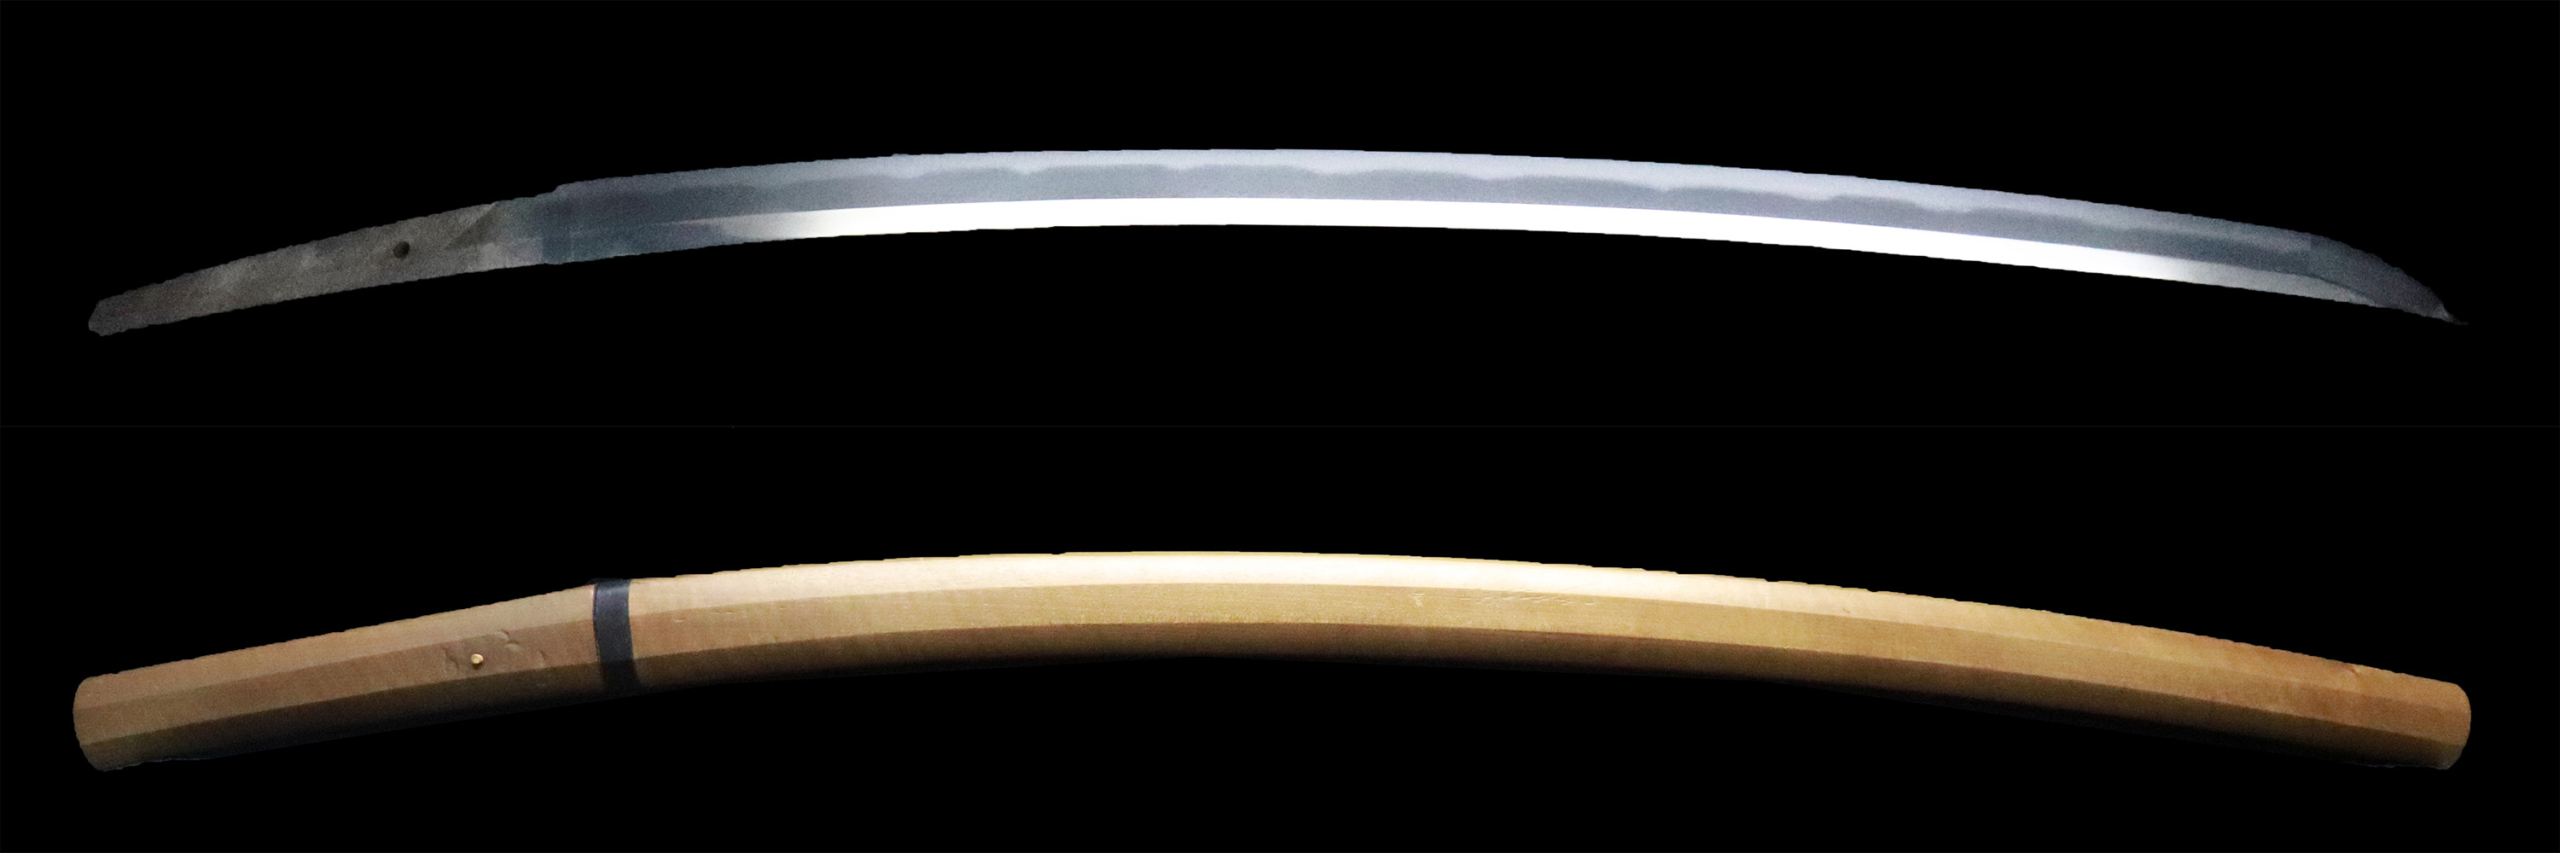 無銘(白鞘)90㎝の長寸刀 | 日本刀販売の「勇進堂」 | 刀剣・美術刀剣